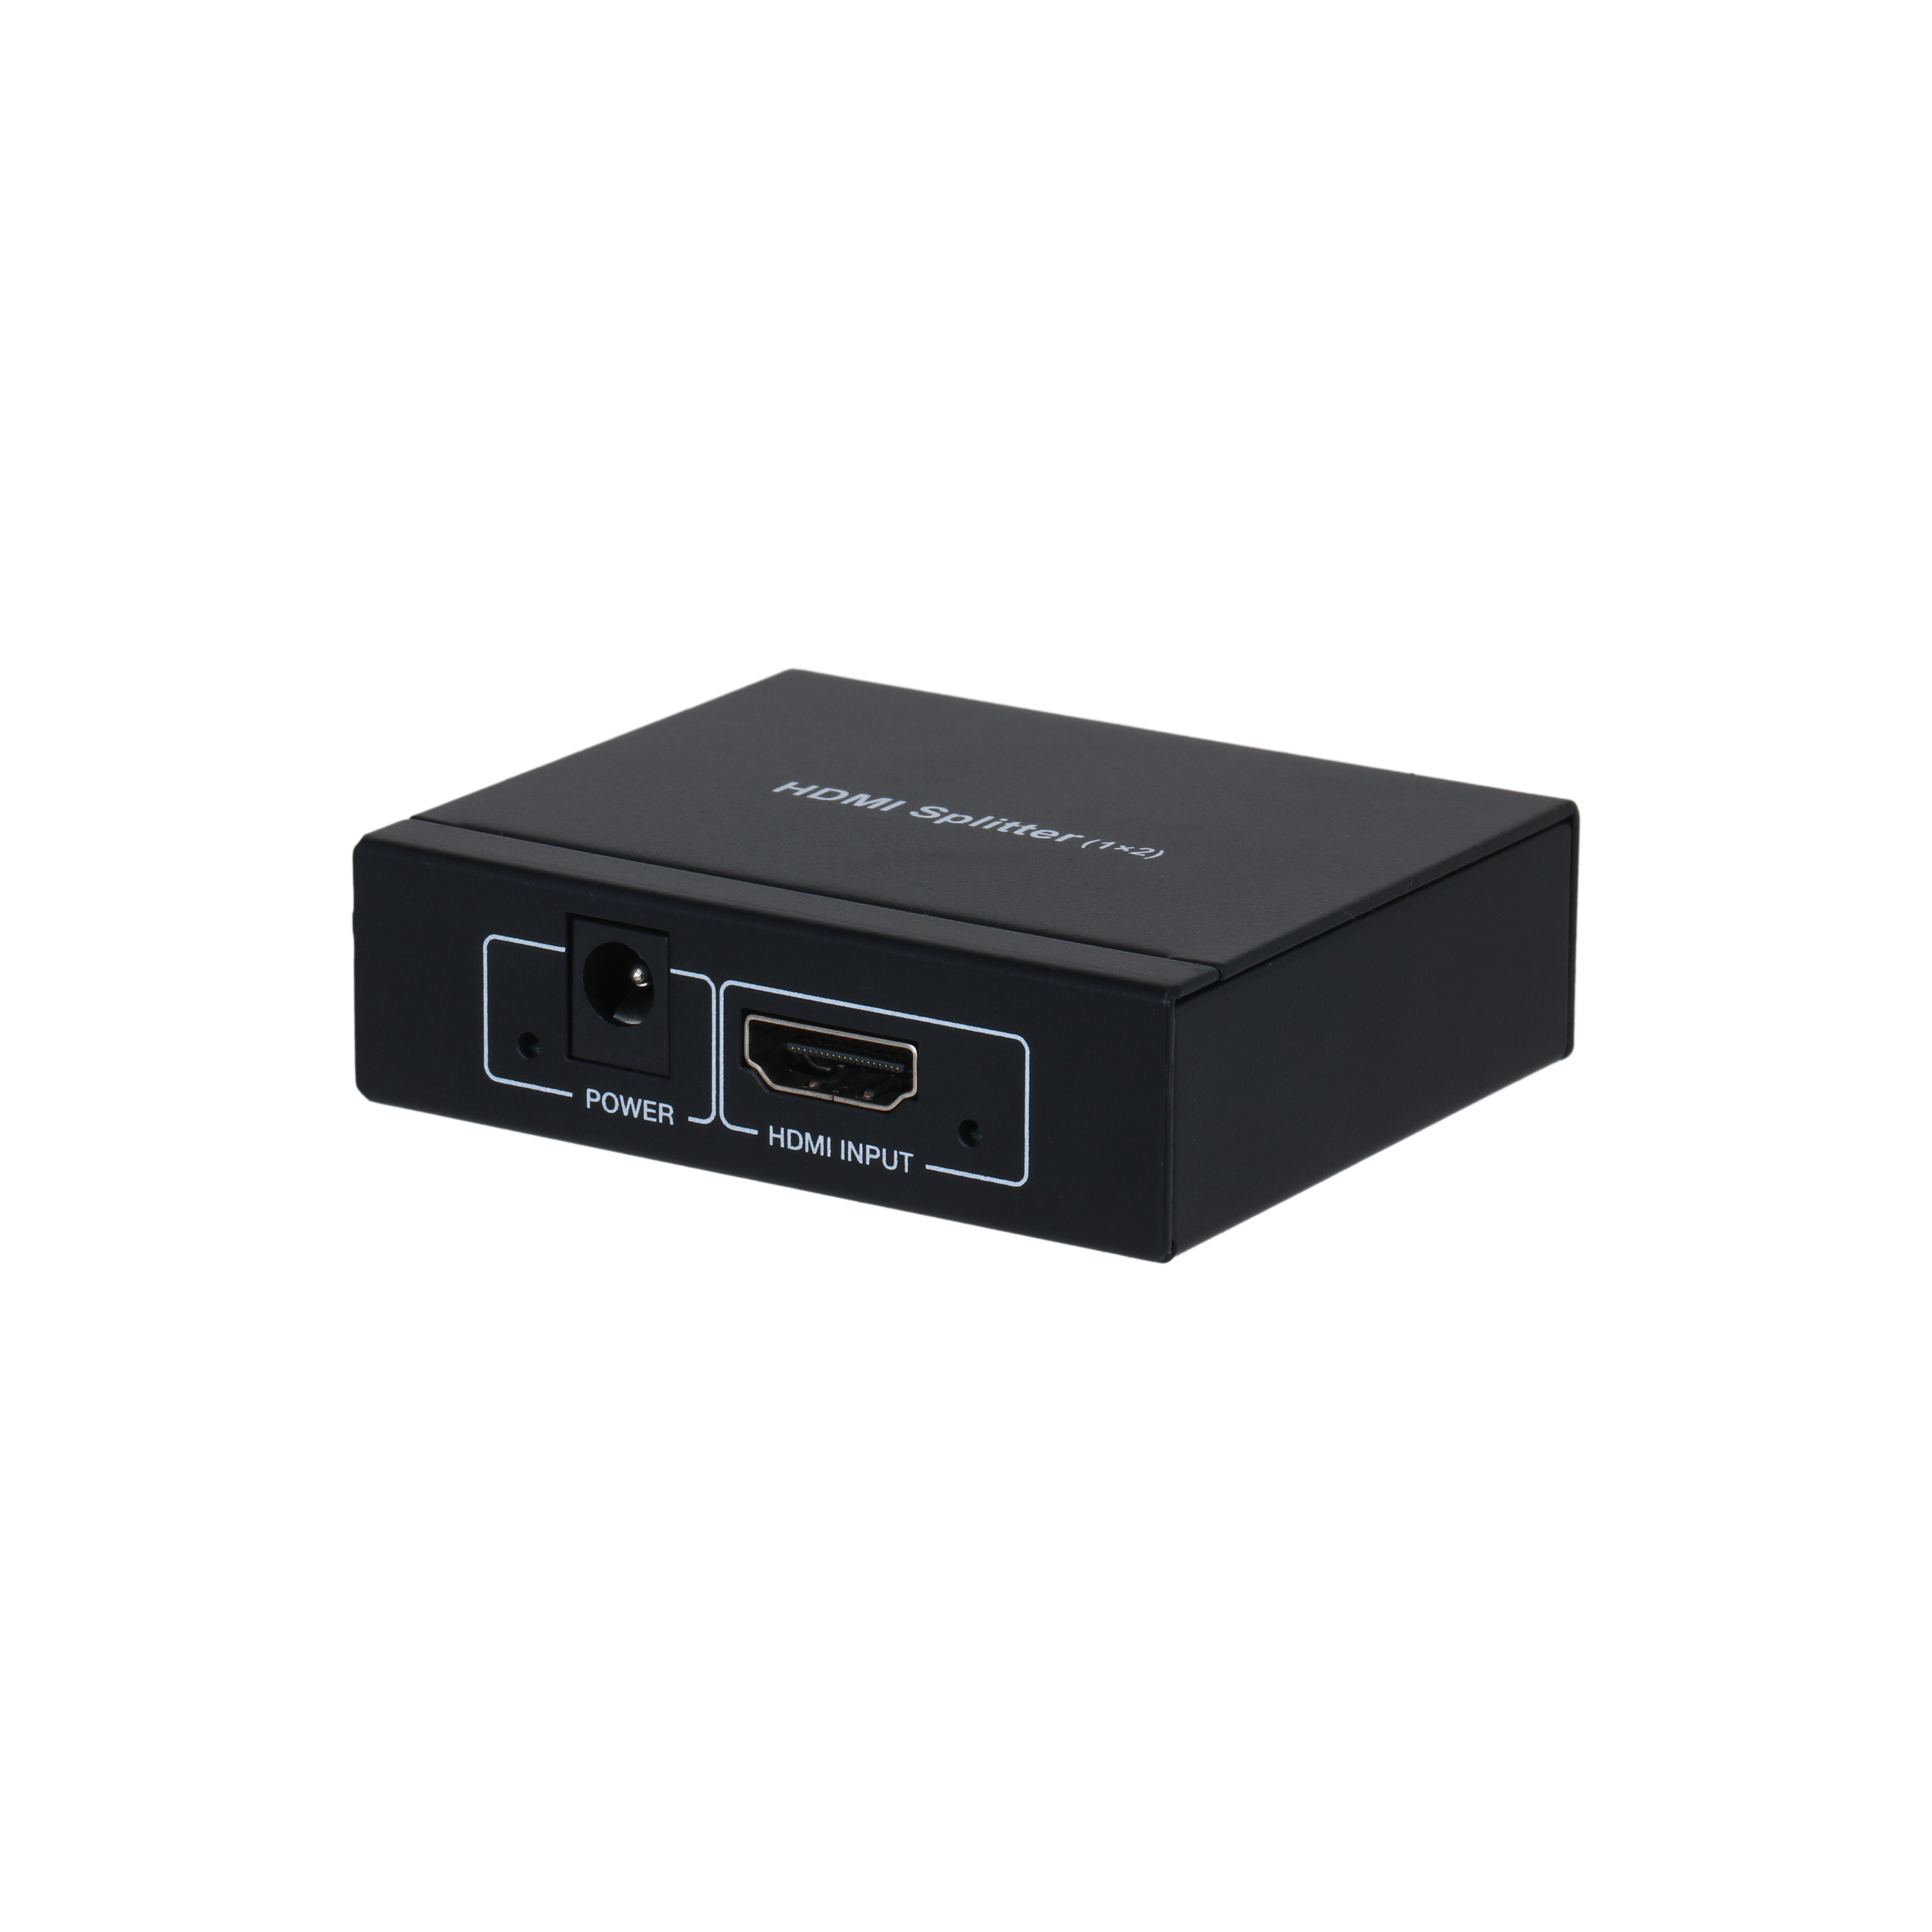 PFM701-4K HDMI SPLITTER (1 IN X 2 OUT) BLACK UPTO 4K x 2K@30 Hz HDMI 1.4 30/36/48 BIT COLOUR DEPTH PER PIXEL 3D VIDEO FORMAT 5VDC IP54 METAL